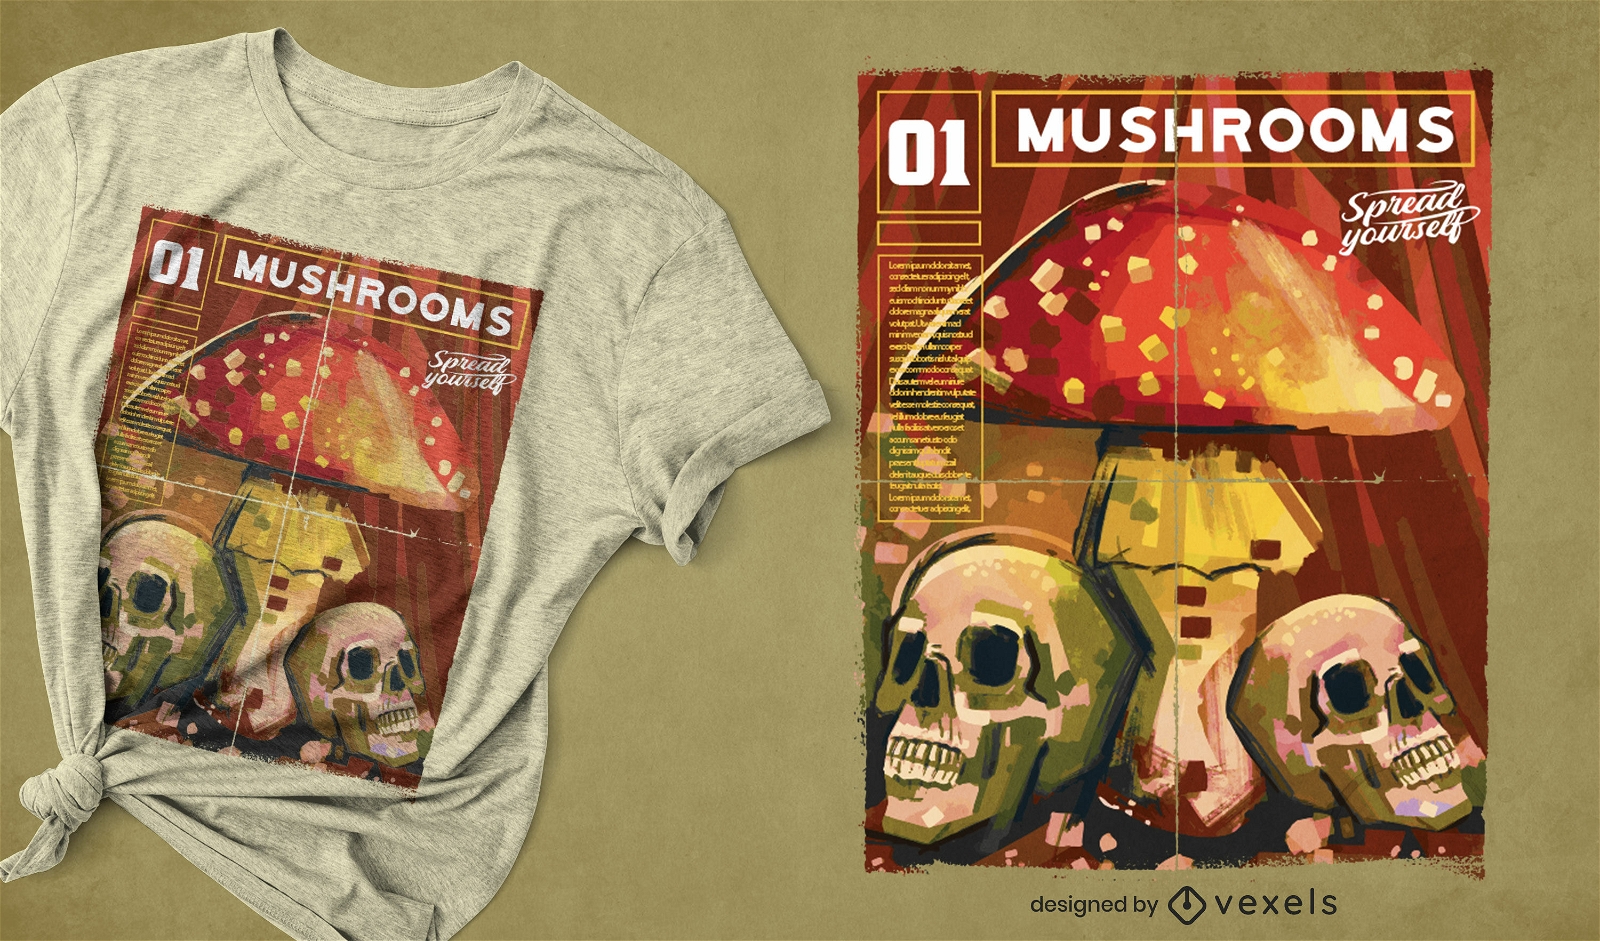 Dise?o de camiseta de la revista Mushrooms.